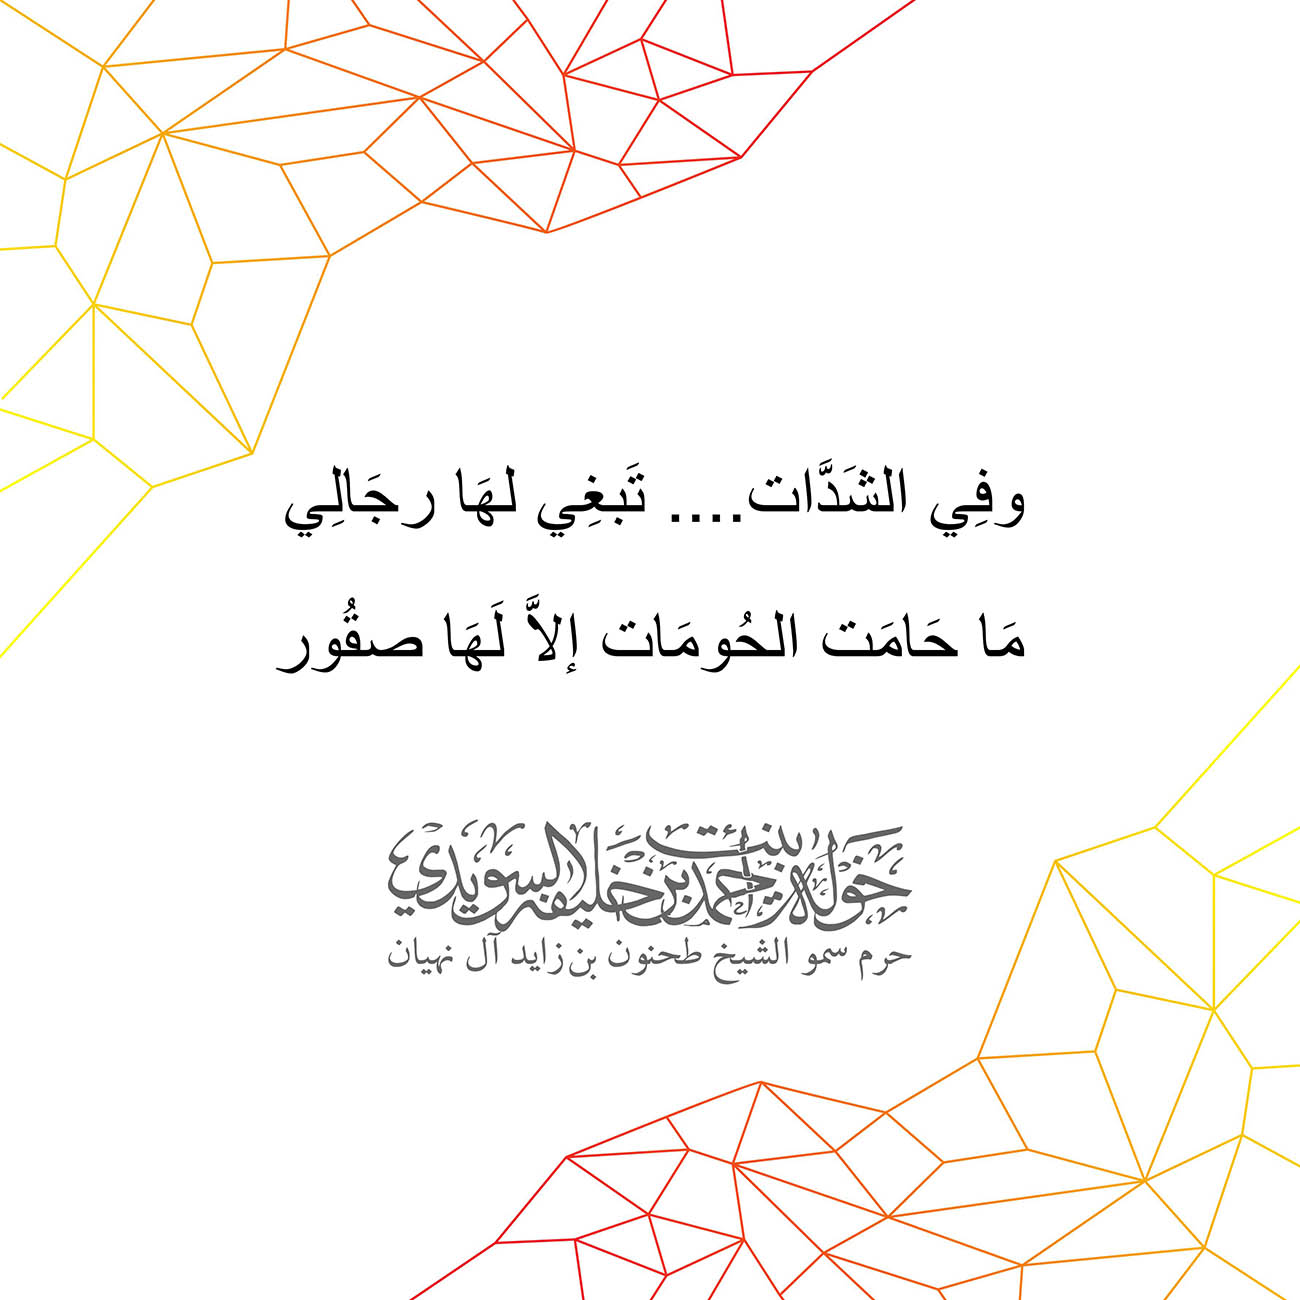 <p style="text-align: center;">
	<span dir="RTL">وفِي الشَدَّات.... تَبغِي لهَا رجَالِي</span></p>
<p style="text-align: center;">
	<span dir="RTL">مَا حَامَت الحُومَات إلاَّ لَهَا صقُور</span></p>
, Her Highness Sheikha Khawla Bint Ahmed Khalifa Al Suwaidi,Khawla Sheikha, Sheikha Khawla,خوله, Khawla Suwaidi,Khawla, khawla al sowaidi,khawla sowaidi,Khawla Al Suwaidi,National Poetry, Poetry, Arabic poems, Arab poet,Arab calligrapher,Arab artist,خوله السويدي, khawla alsuwaidi,khawla al suwaidi, peace and love exhibition at saatchi gallery london, peace & love,arabic poem,arabic poetry,peace and love, peace ,love, sheikha khawla bint ahmed bin khalifa al suwaidi,sheikha khawla bint ahmed bin khalifa al suwaidi,khawla  al suwaidi,khawla  alsuwaidi, khawla, خوله السويدي , خوله بنت احمد بن خليفه السويدي , خوله   احمد   السويدي  